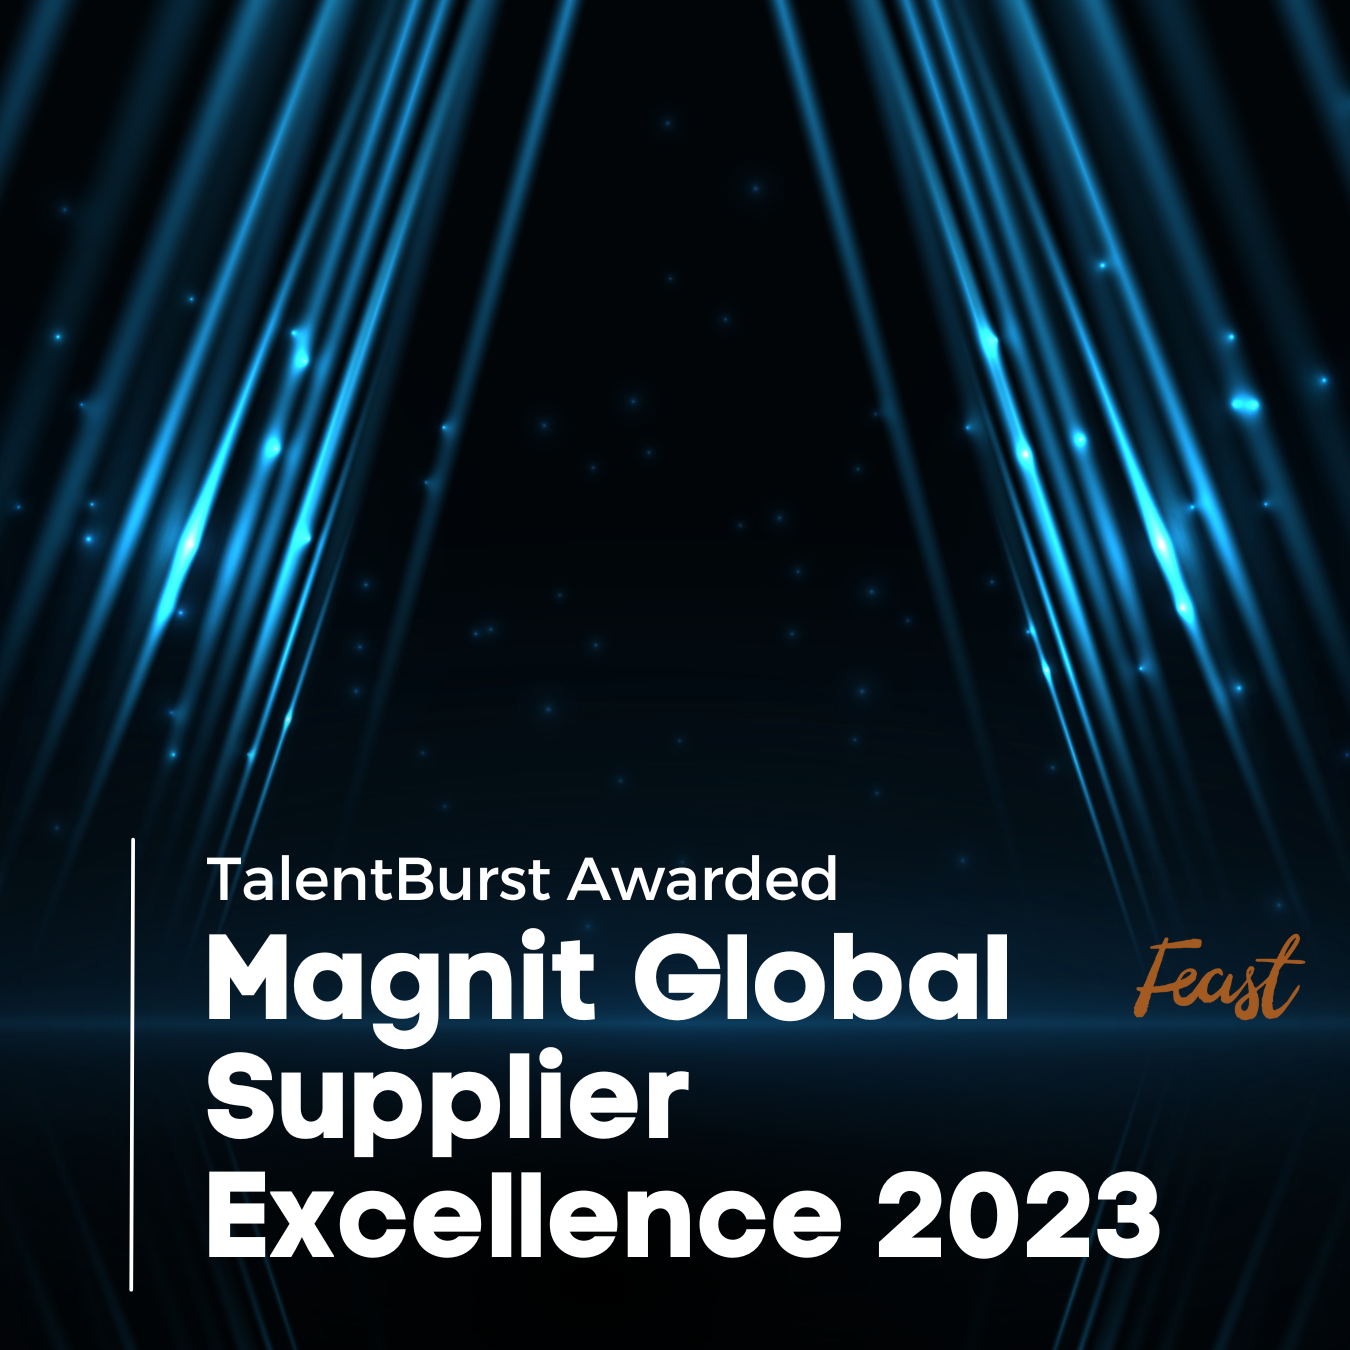 TalentBurst Awarded Magnit Global Supplier Excellence 2023